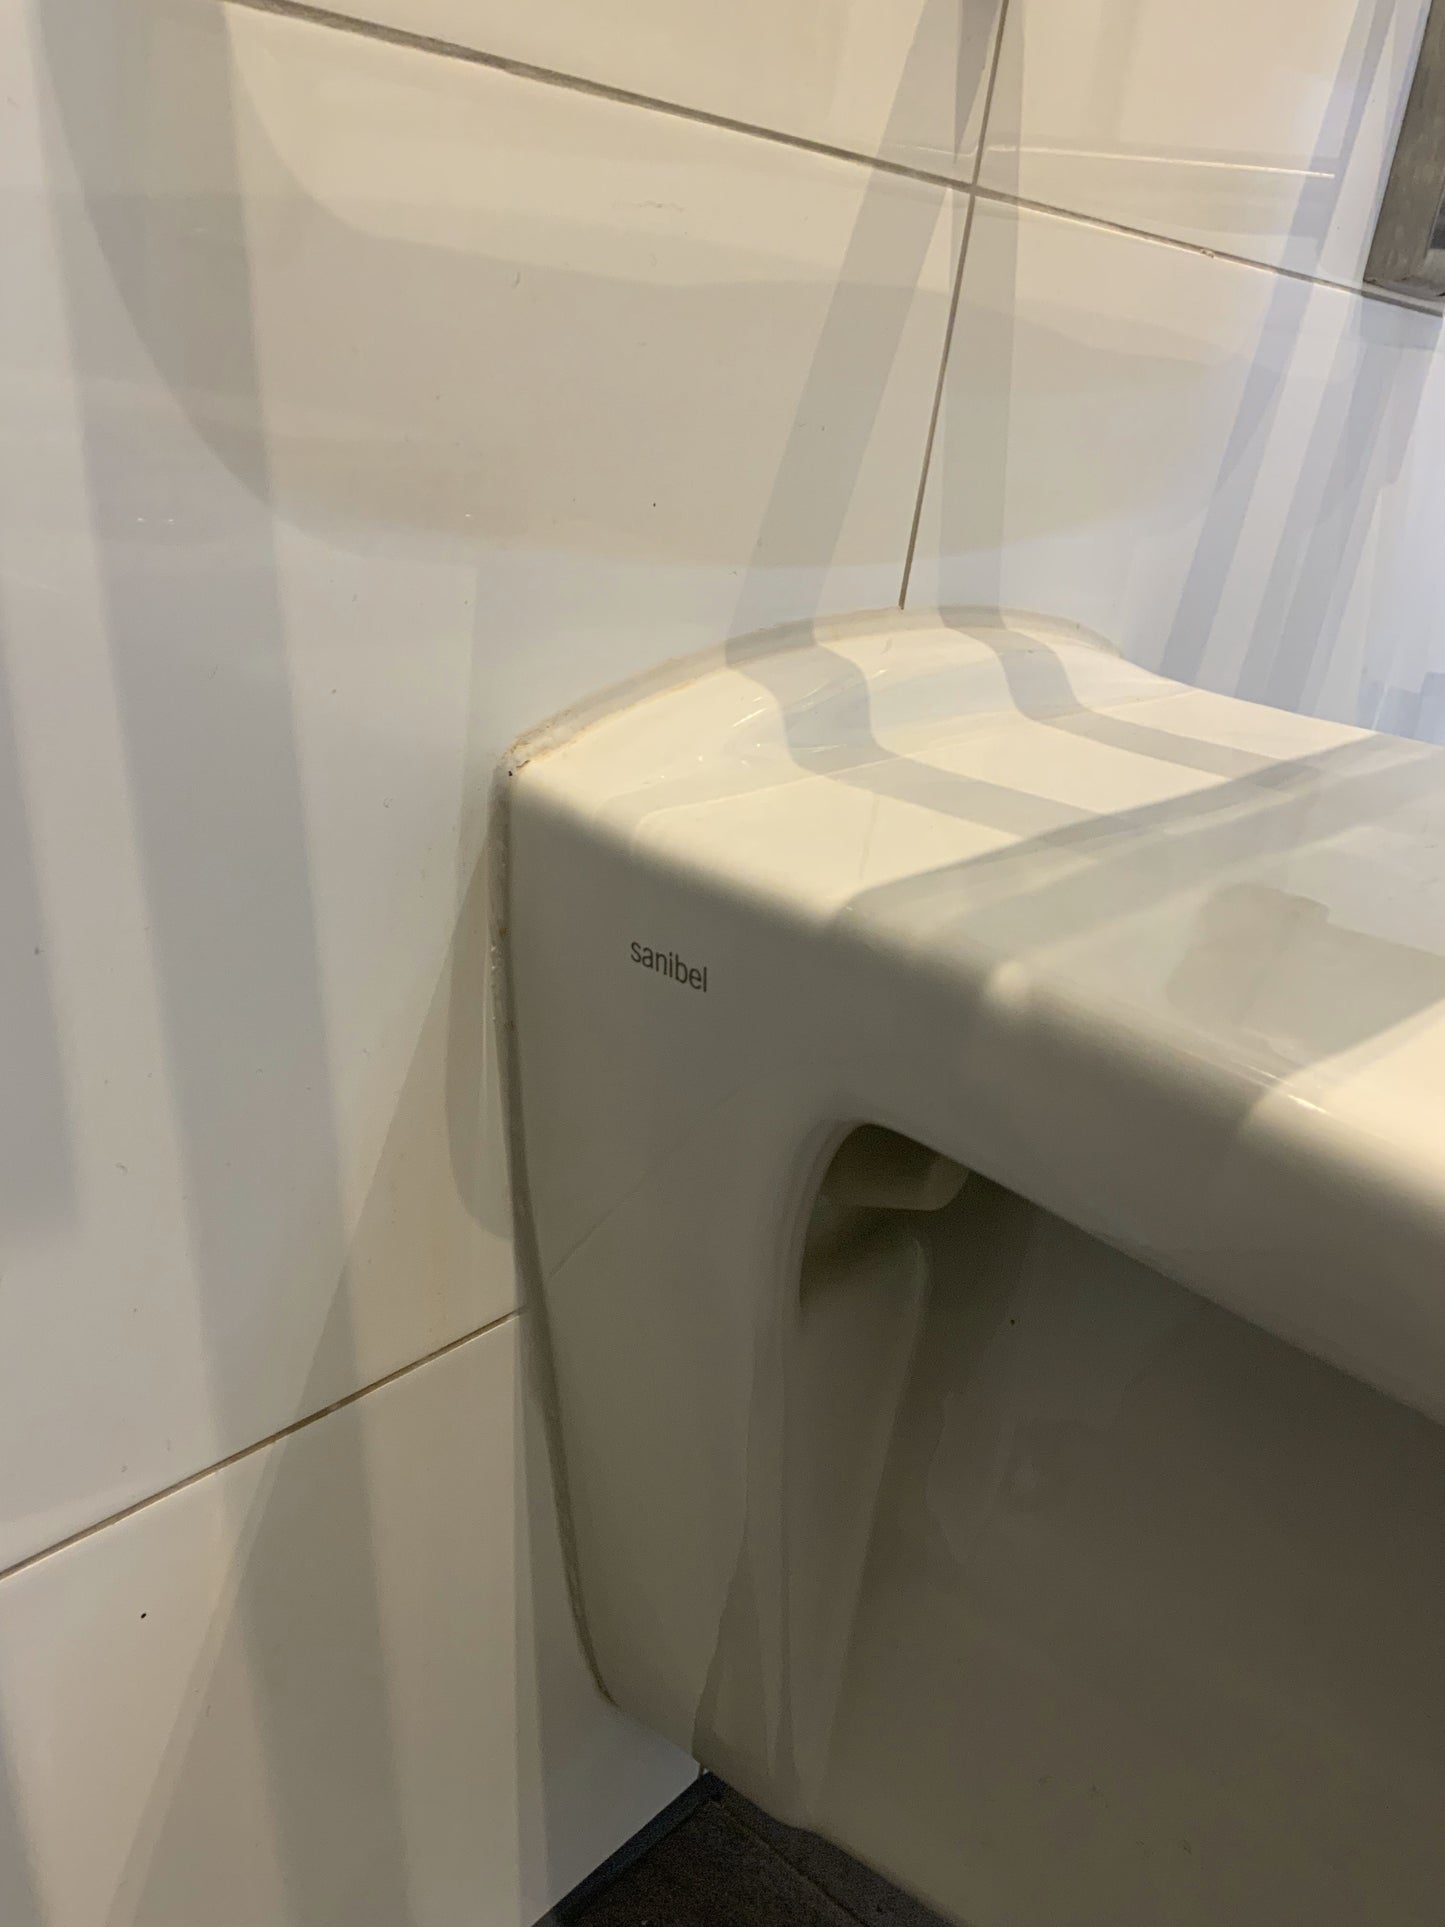 Toilette / barrierefreies WC 390x475x705